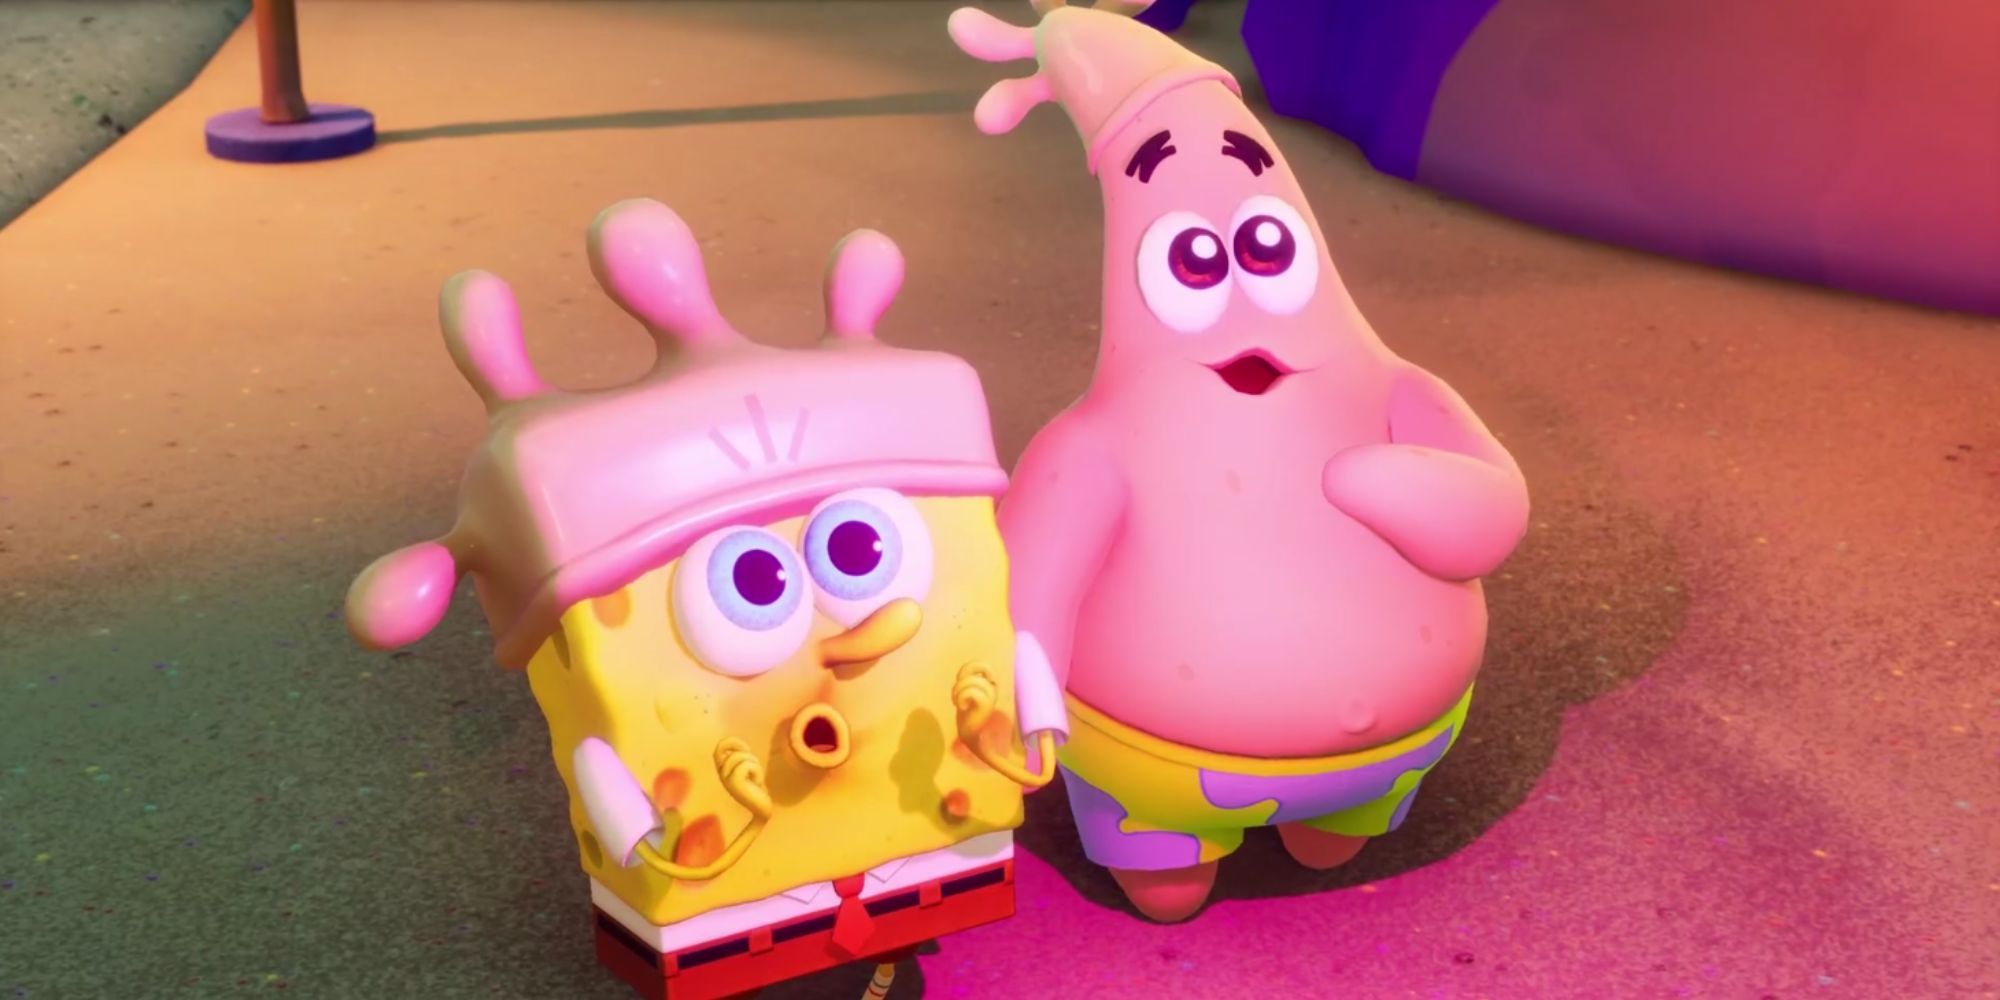 SpongeBob and Patrick in The Cosmic Shake.